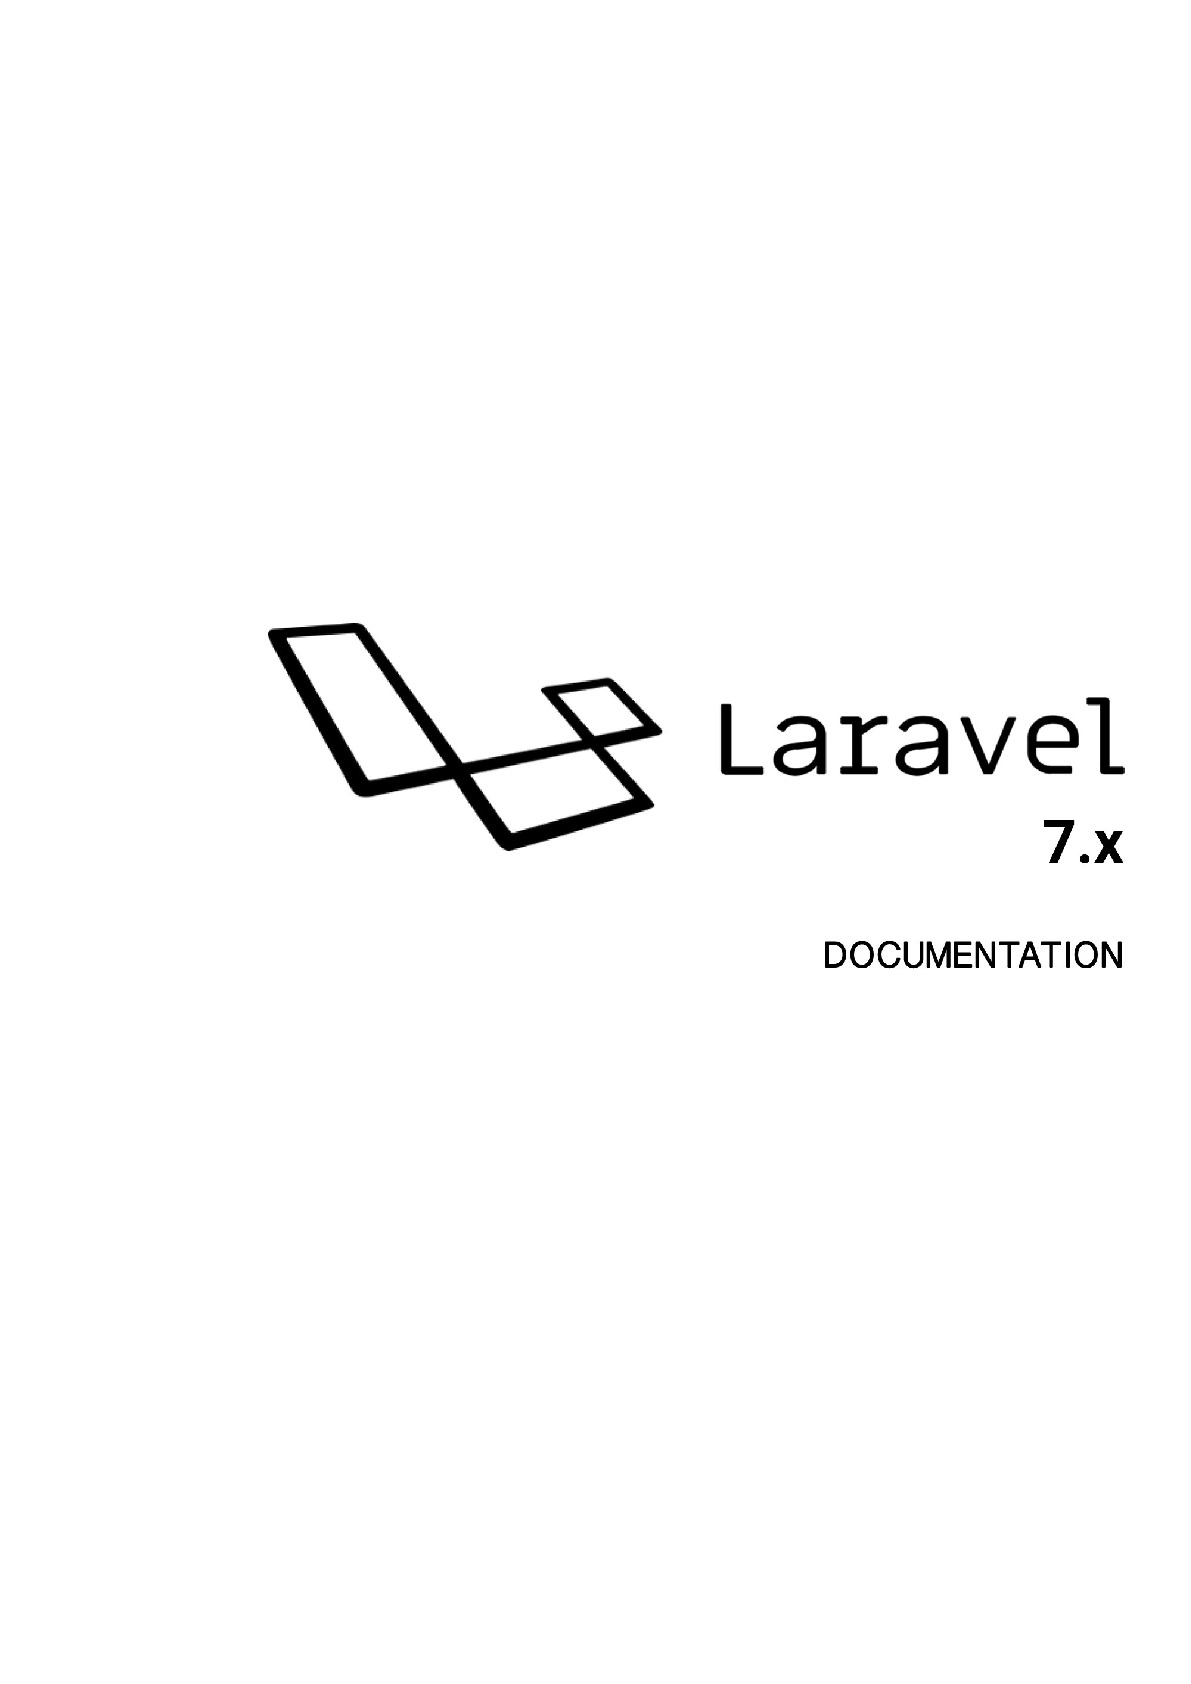 laravel-docs-7.x